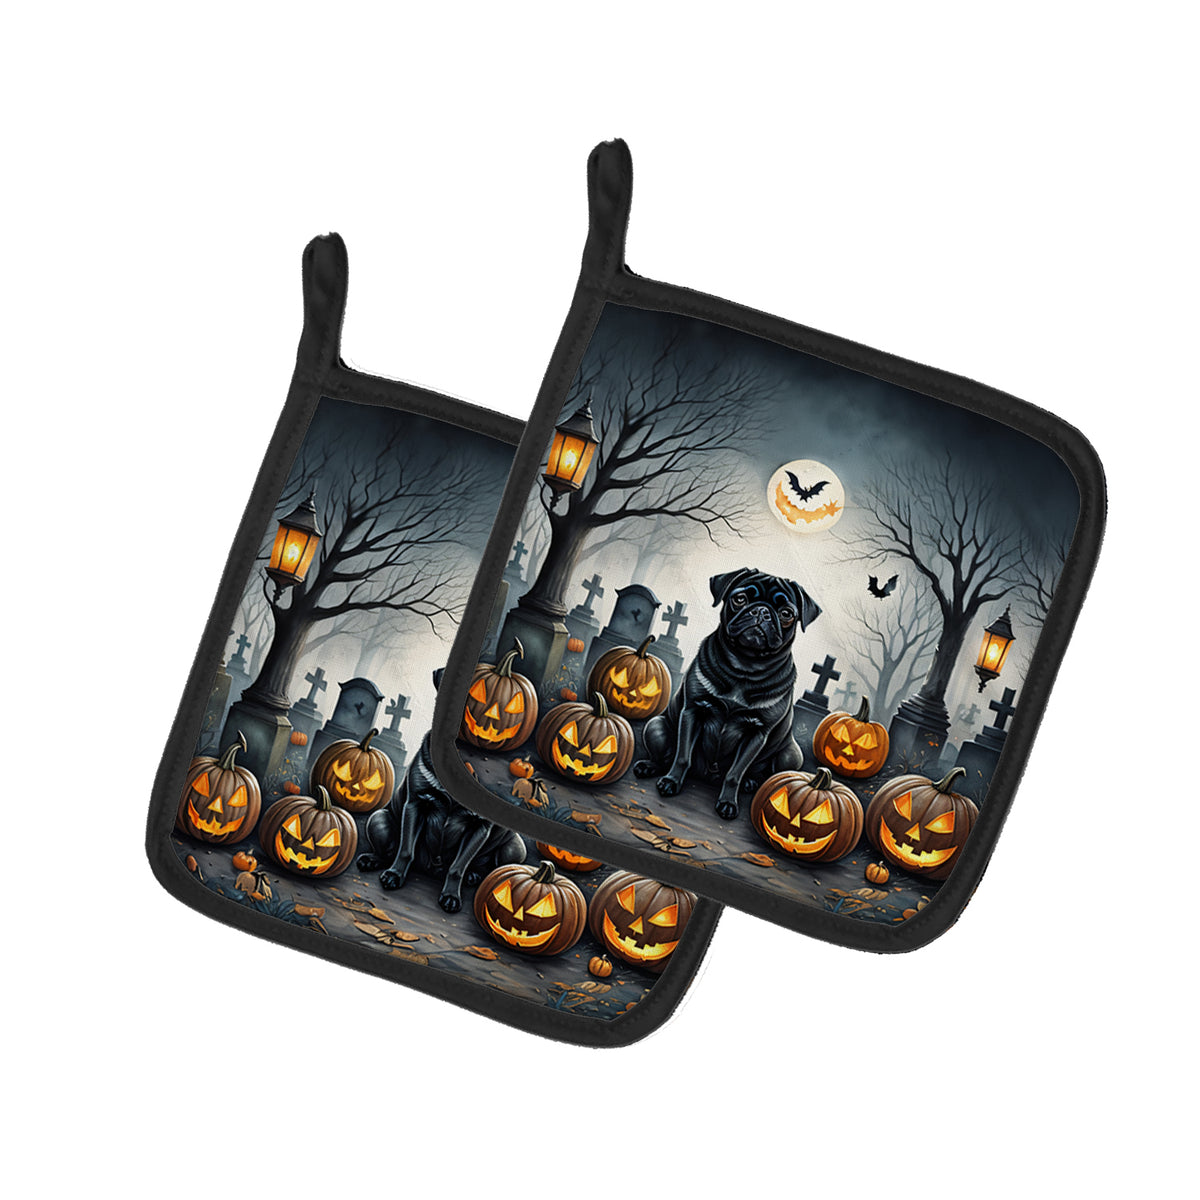 Buy this Black Pug Spooky Halloween Pair of Pot Holders